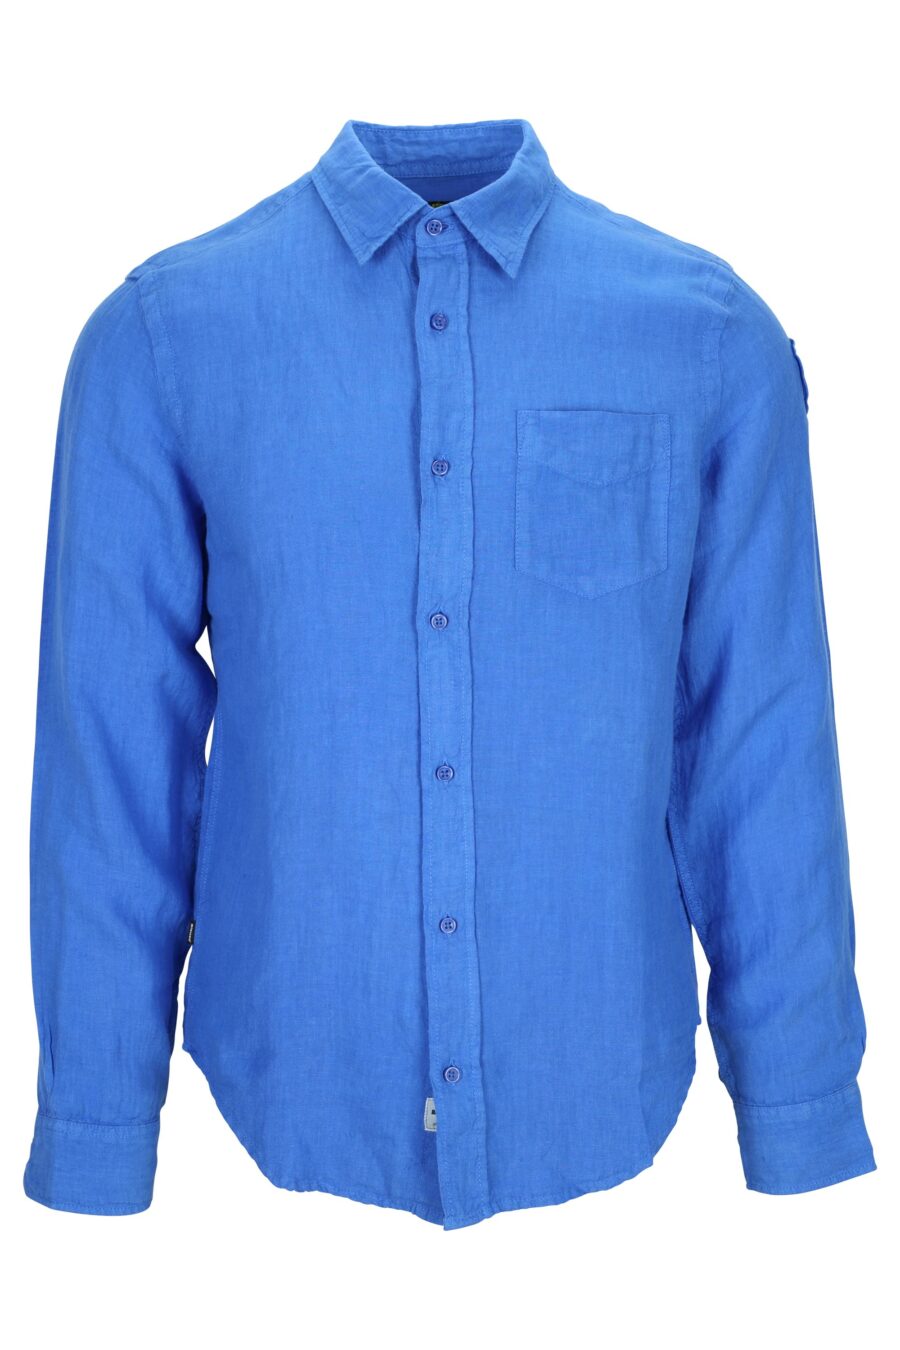 Chemise bleue avec mini logo - 8058610776176